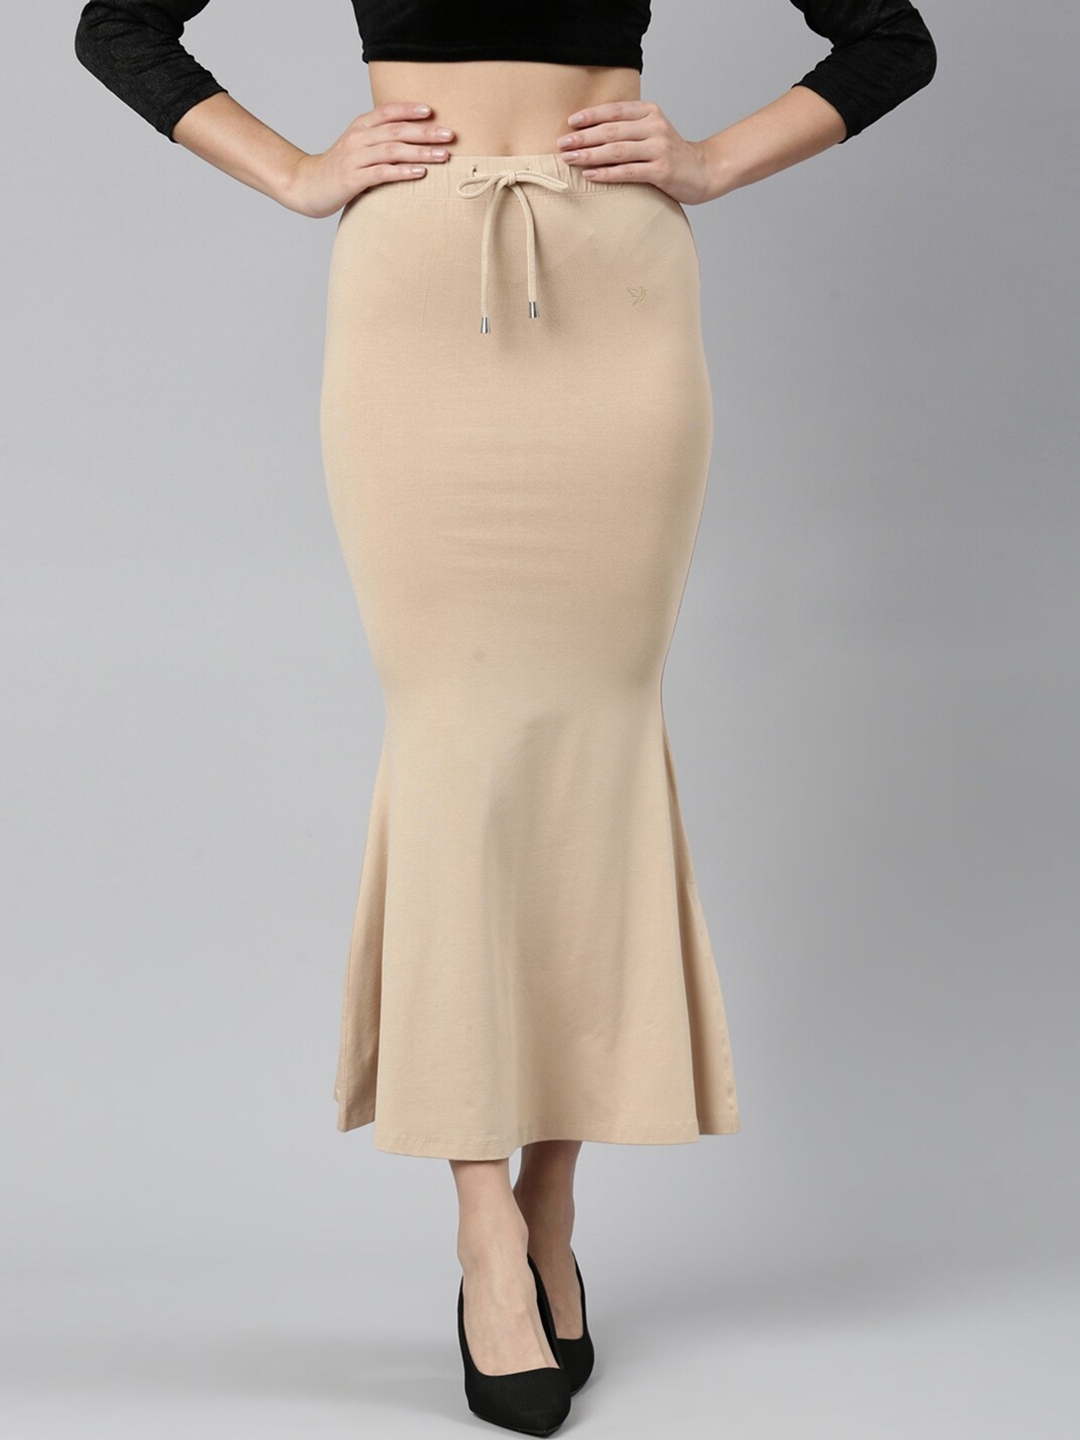 Buy TWIN BIRDS High Waist Saree Skirt - Shapewear for Women